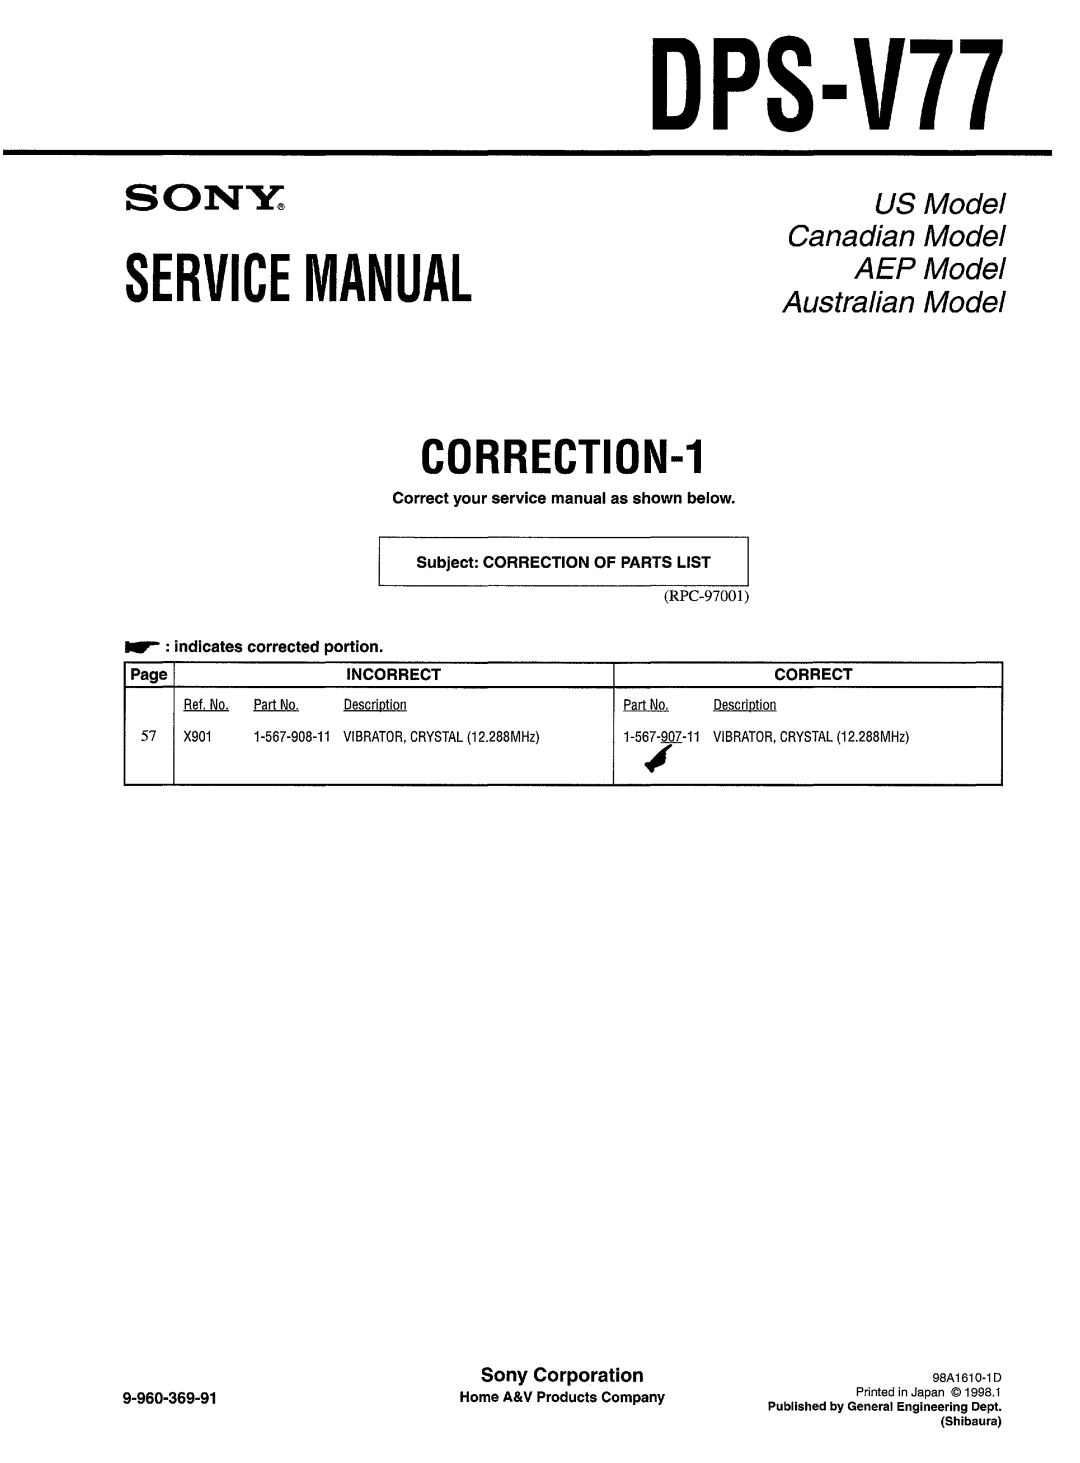 Sony DPS-V77 Sony Corporation, Service Manual, CORRECTION-1, US Model Canadian Model AEPModel Australian Model, Page 